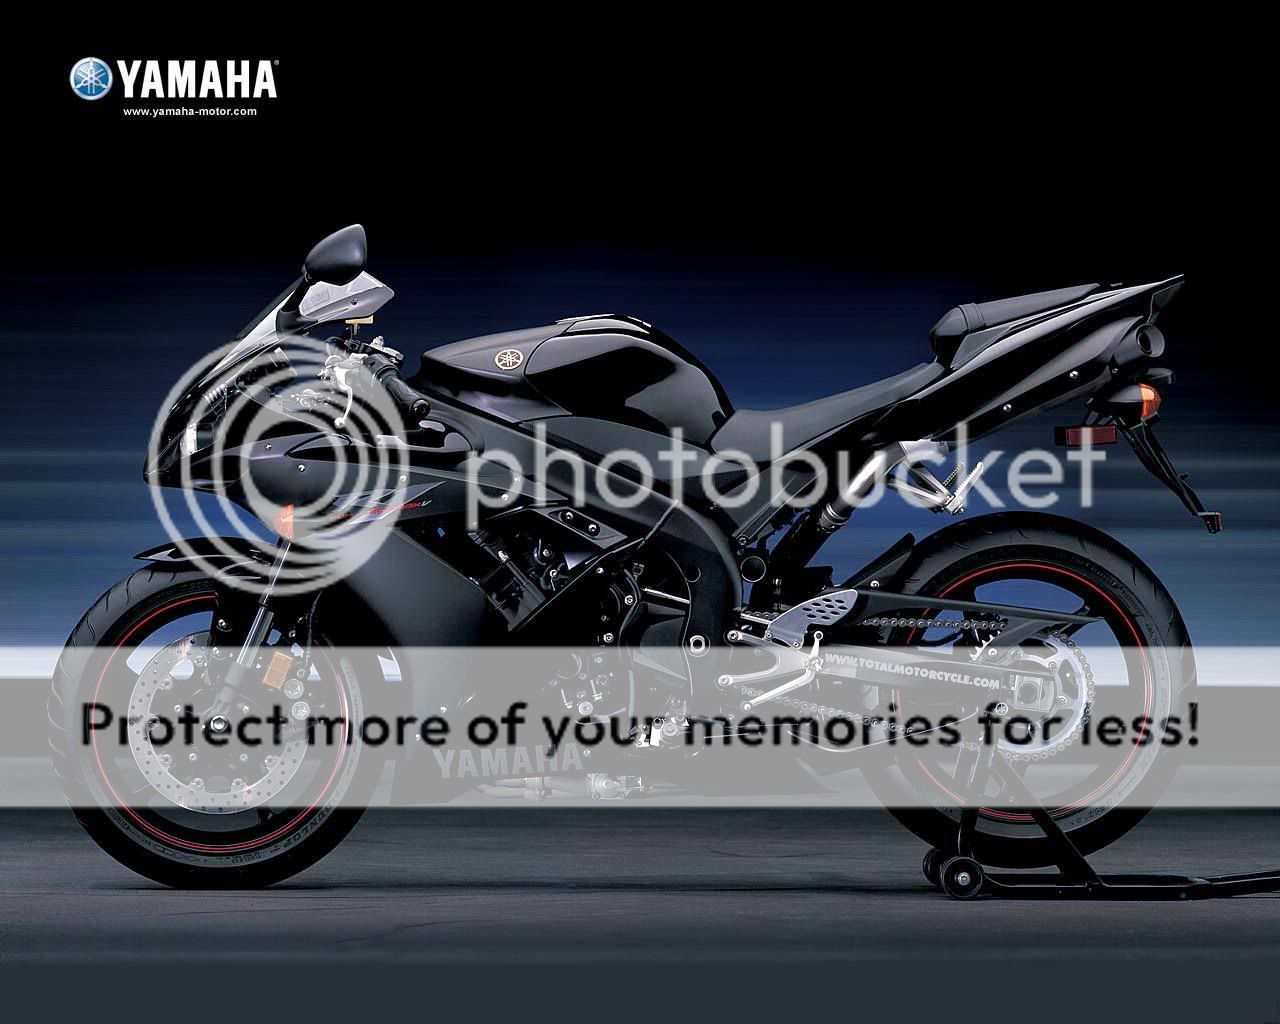 http://i561.photobucket.com/albums/ss52/john_abrh/JOHN/Motorcycles/2005-Yamaha-R1a.jpg